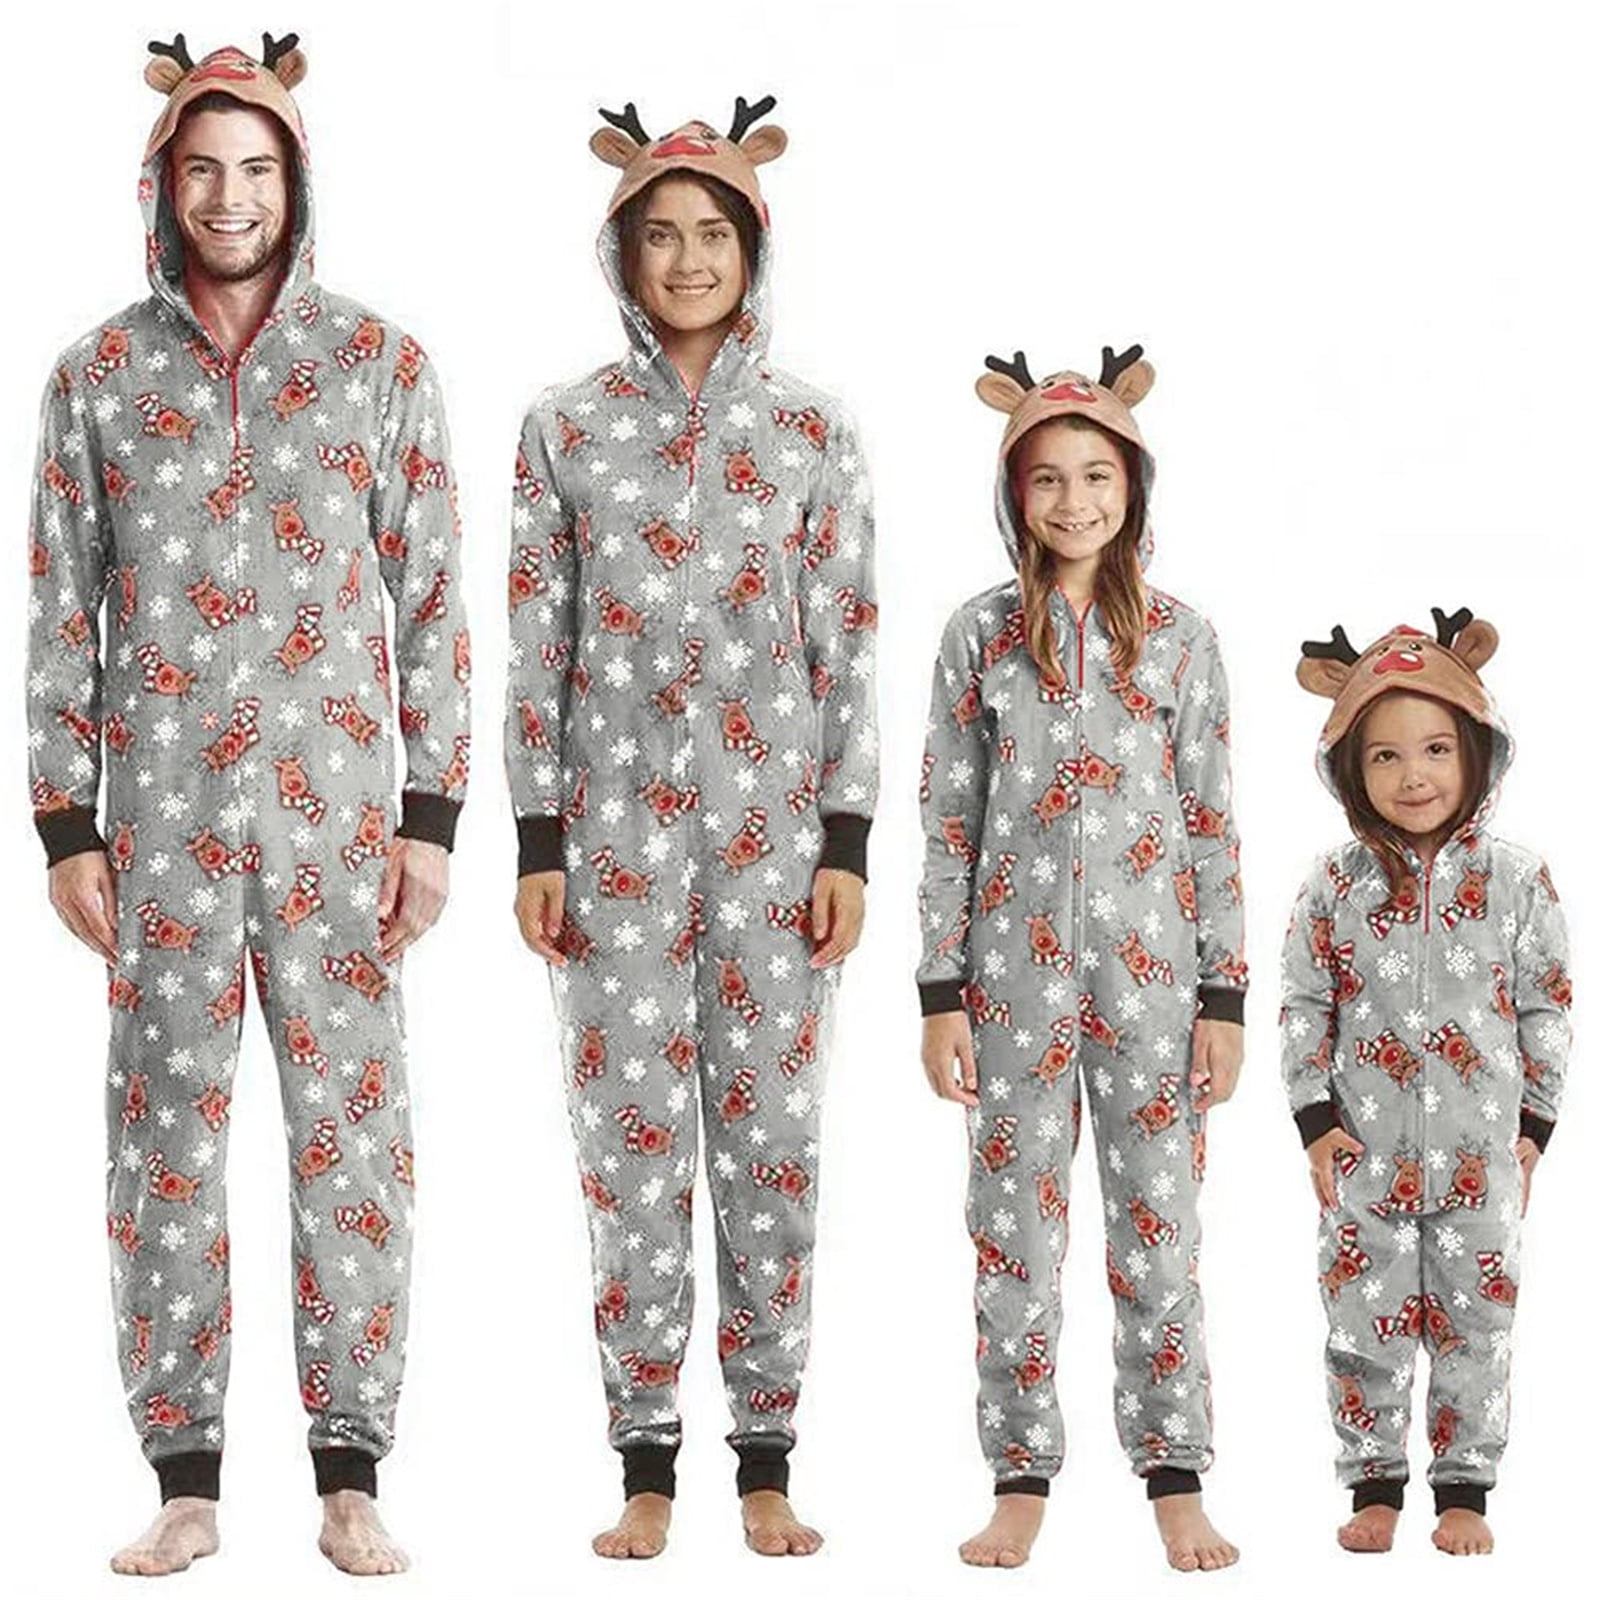 Christmas Gifts Hfyihgf Family Matching Pajamas Cute Reindeer Snowflake Print Christmas Hooded Onesies Pajamas for Couples Kids Baby Holiday Jumpsuit(